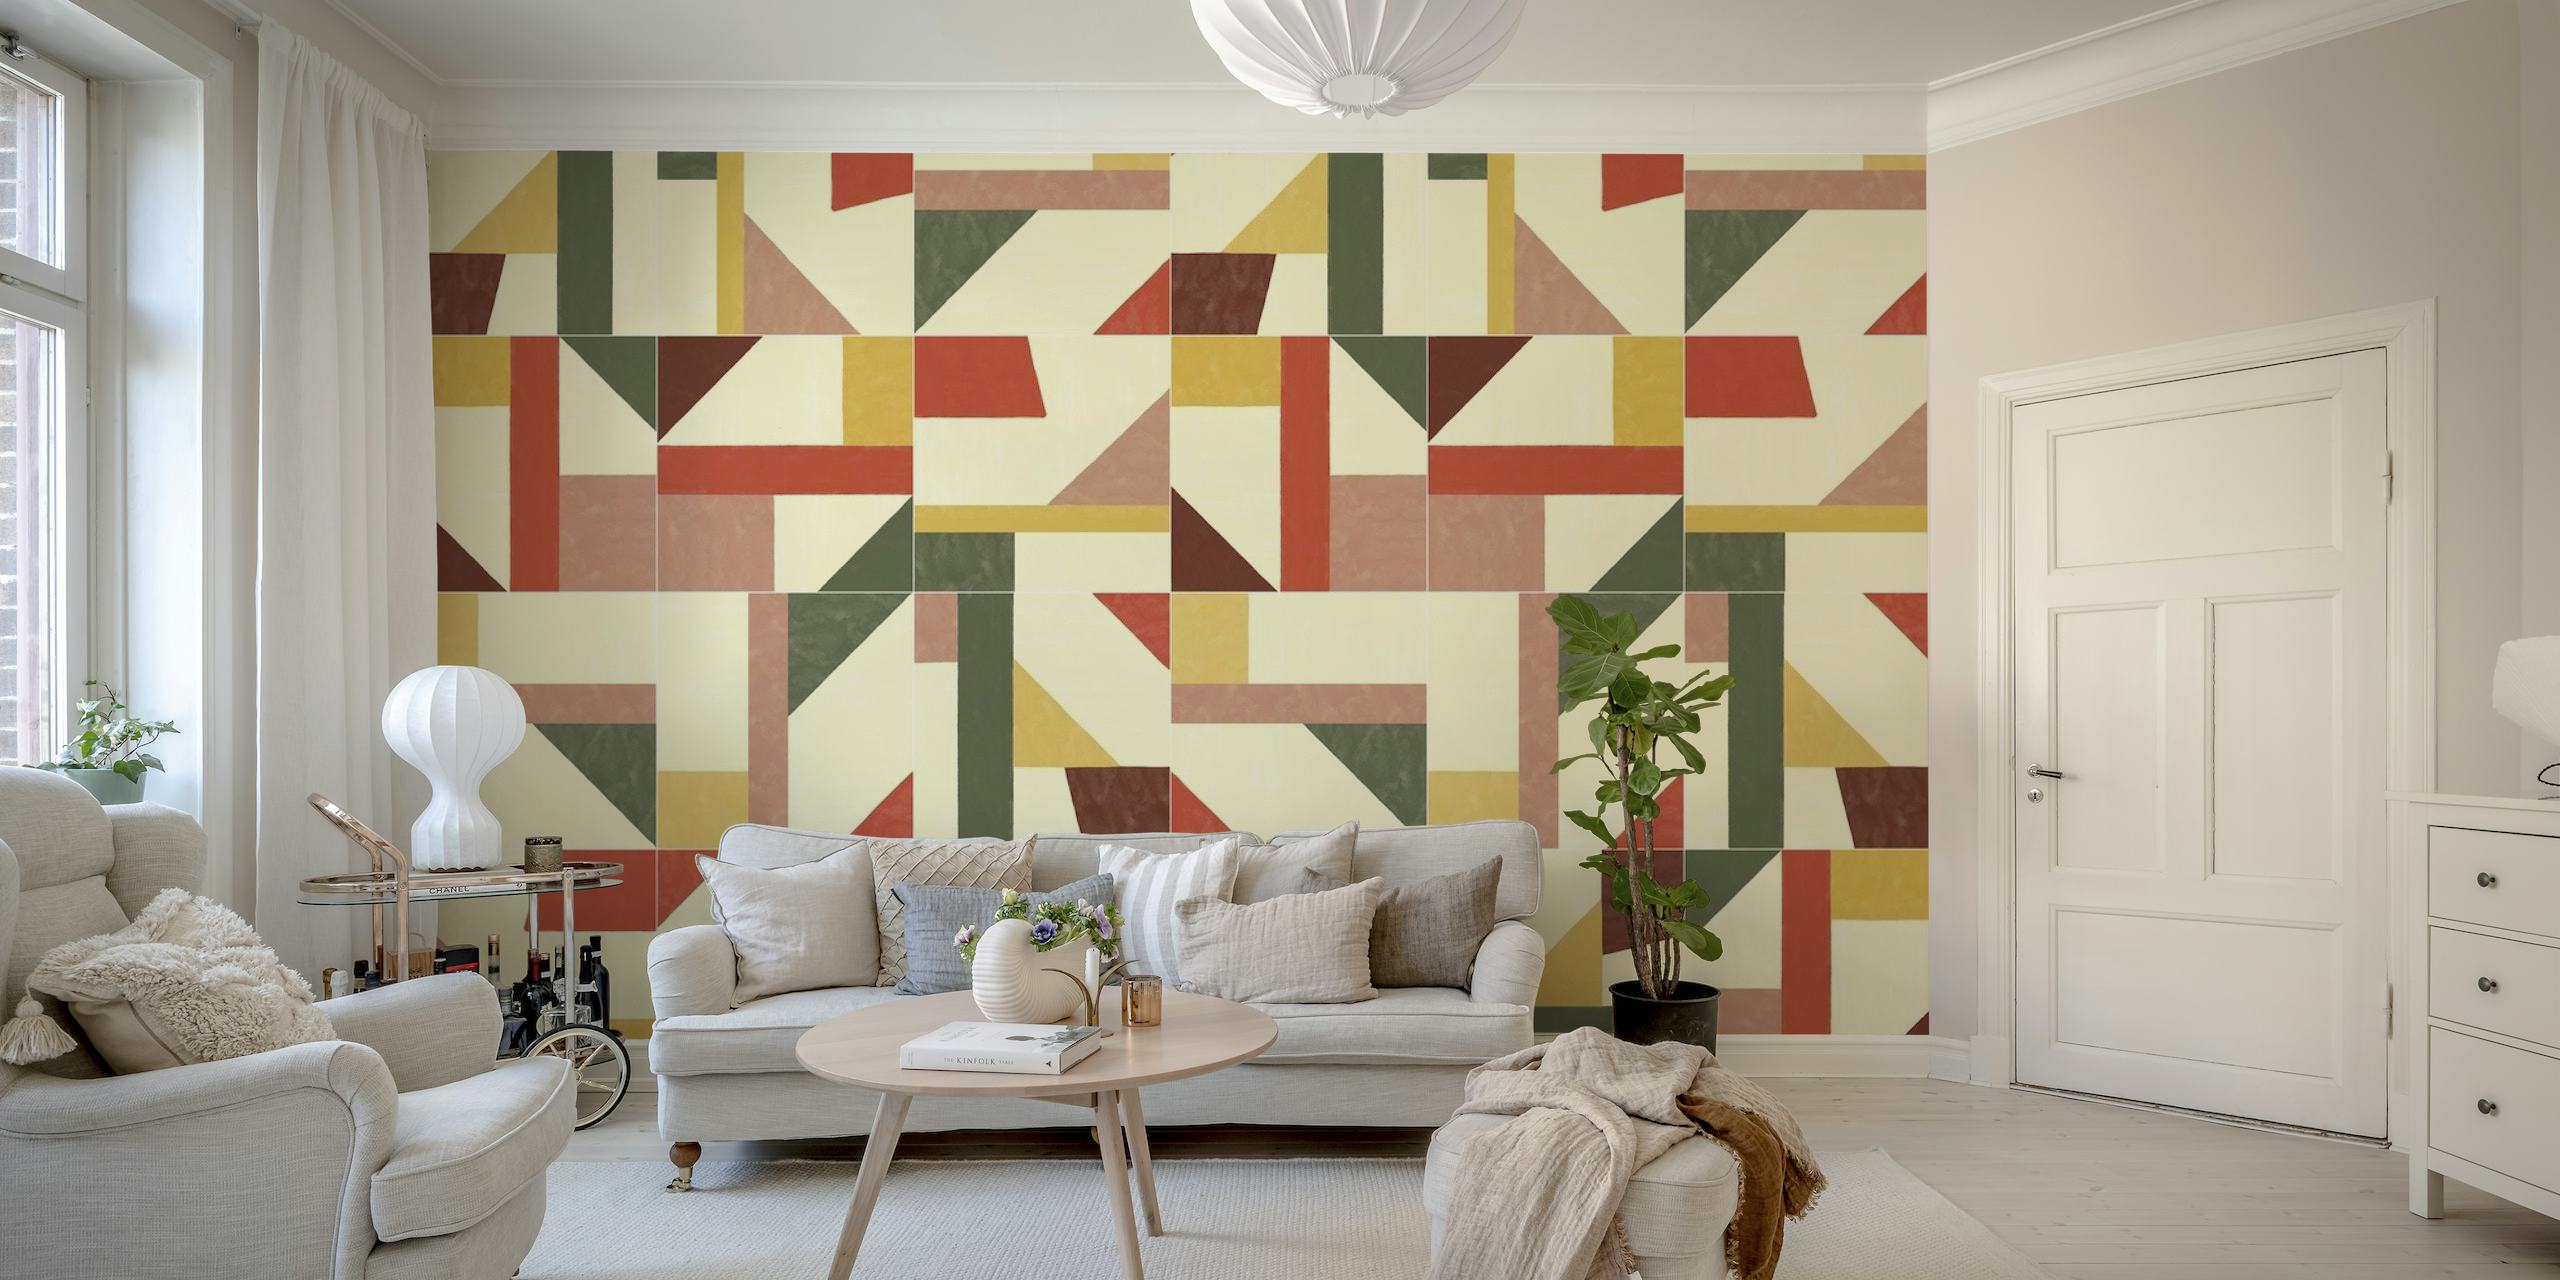 Tangram Wall Tiles Two wallpaper